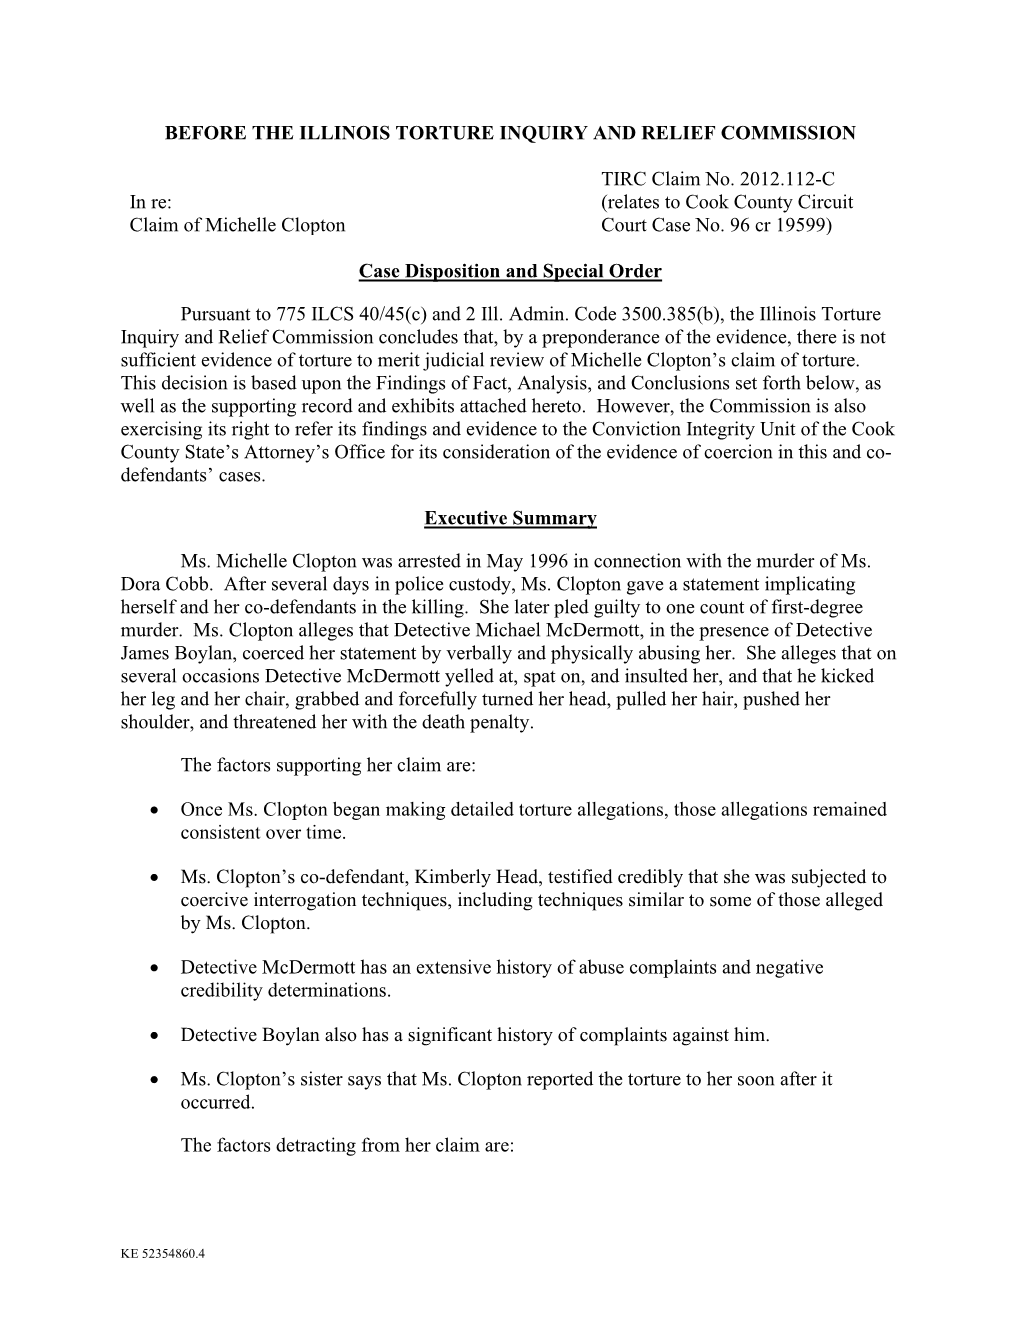 Claim of Michelle Clopton TIRC Claim No. 2012.112-C